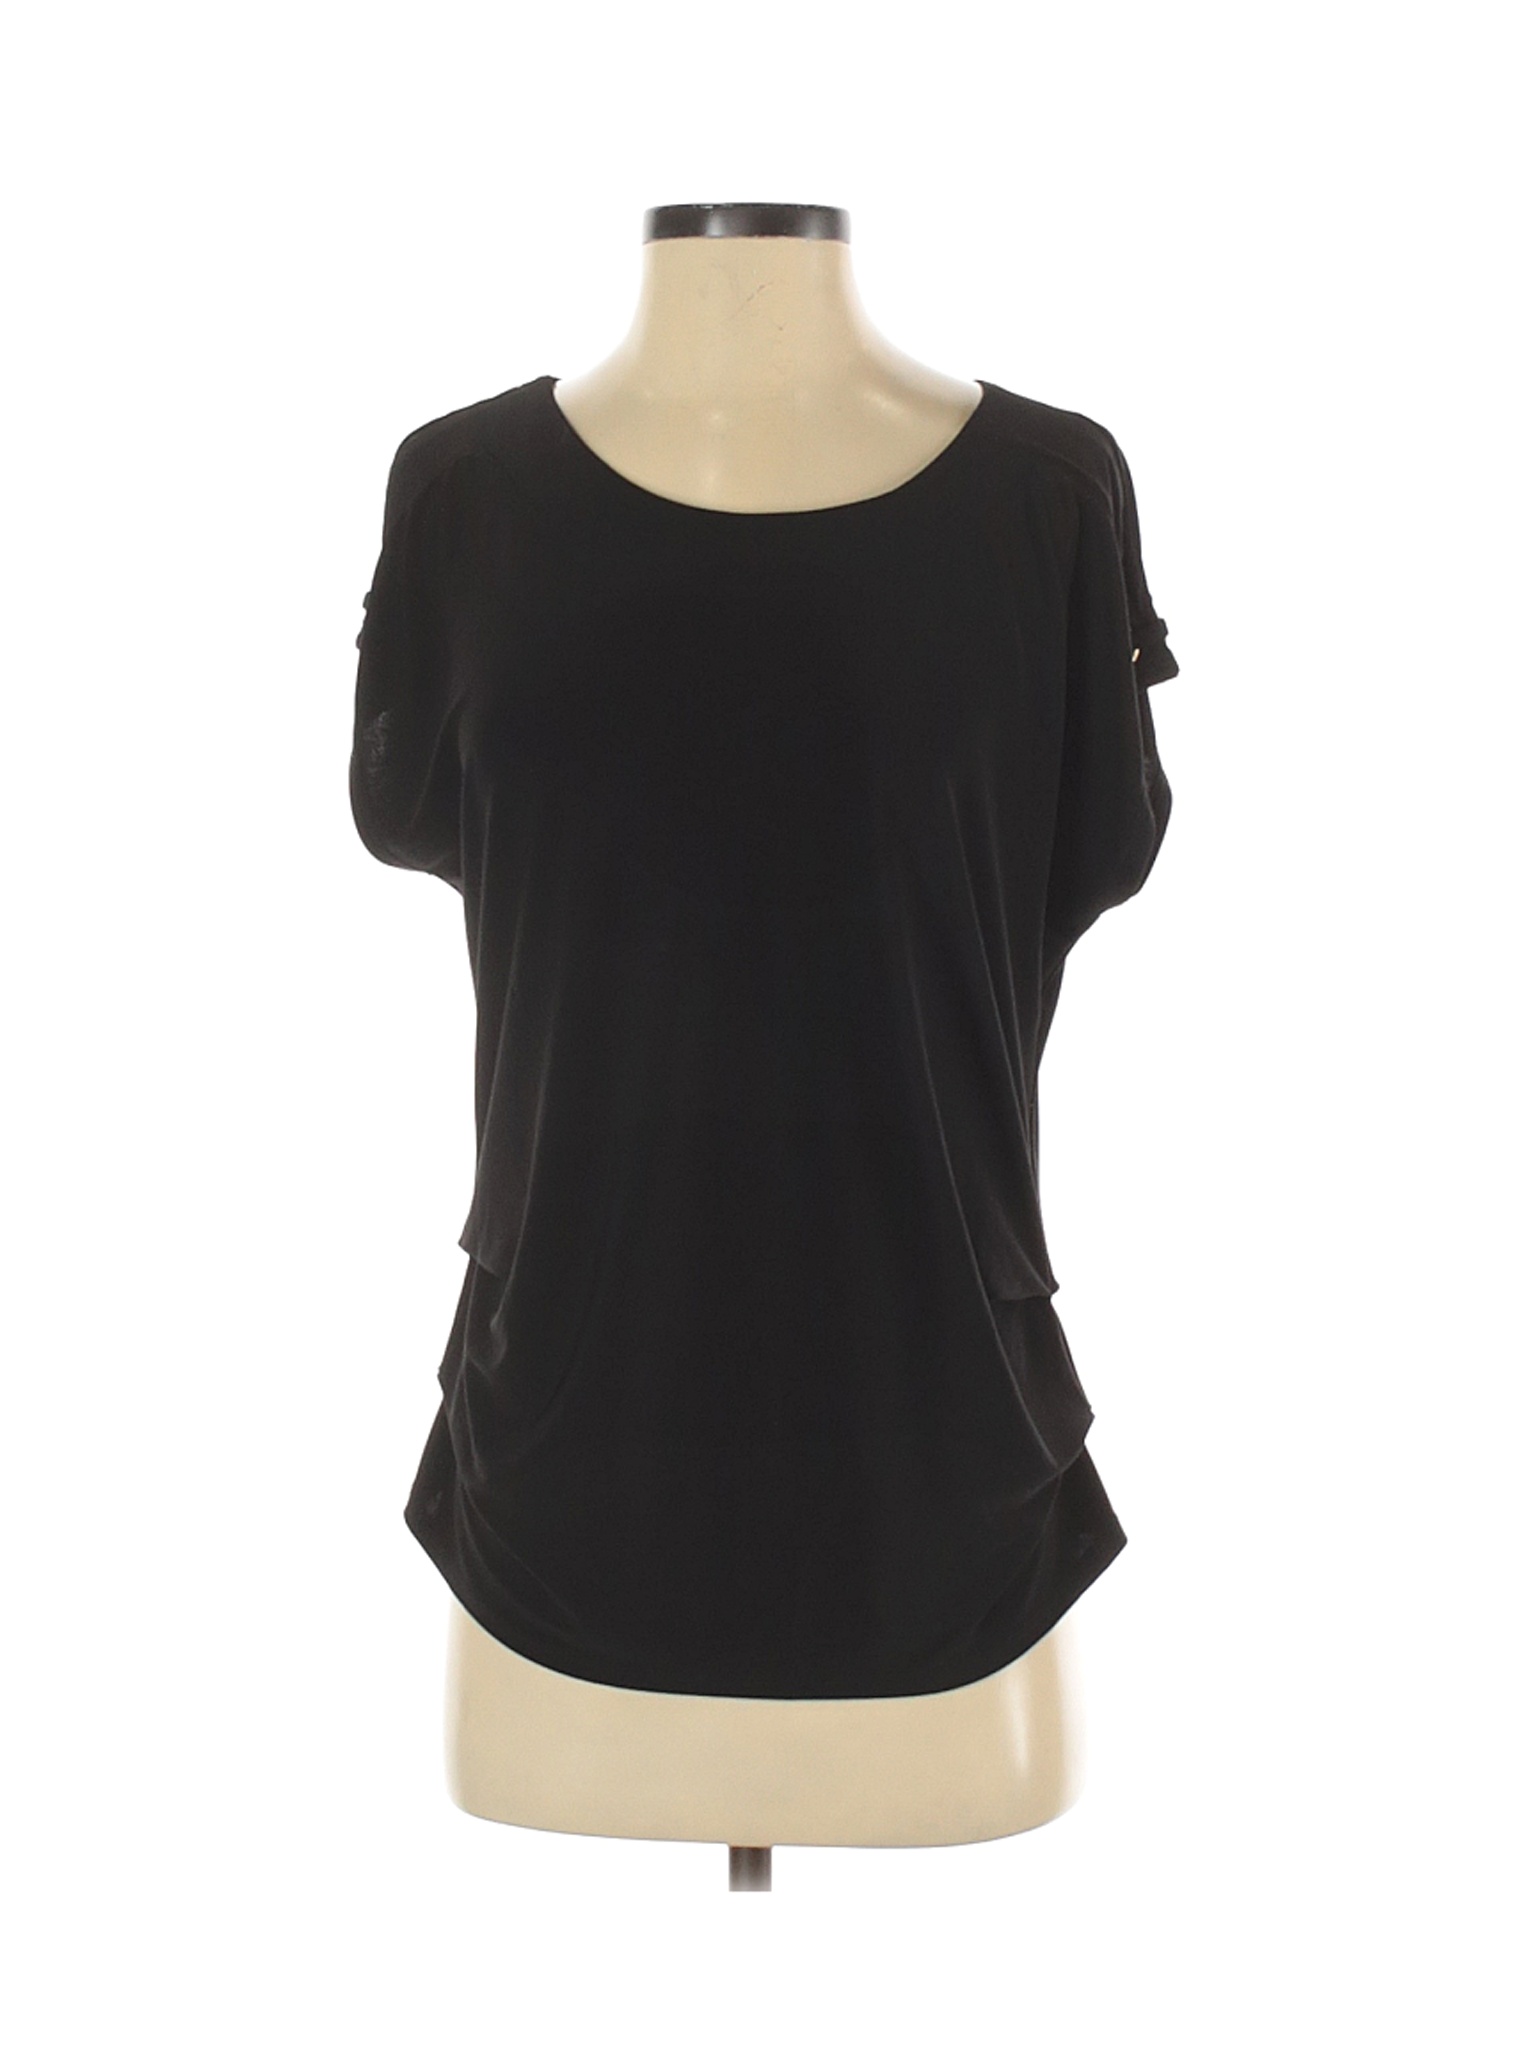 Luxology Women Black Short Sleeve Top S | eBay